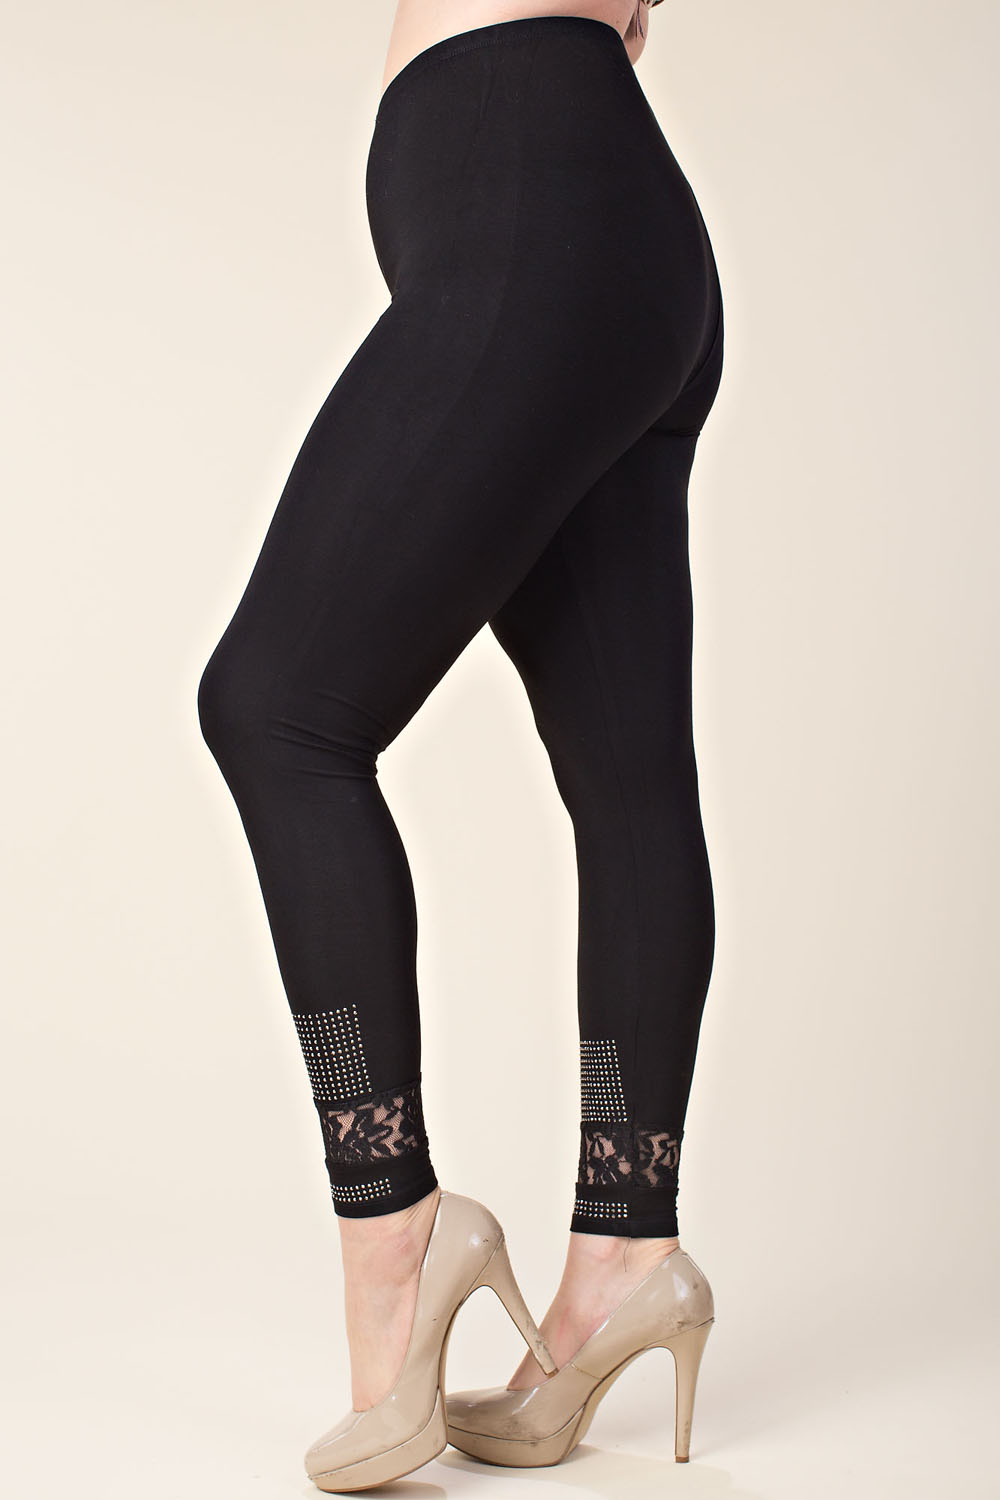 Plus Size Black Bling Lace Leggings - Montana Dress Co